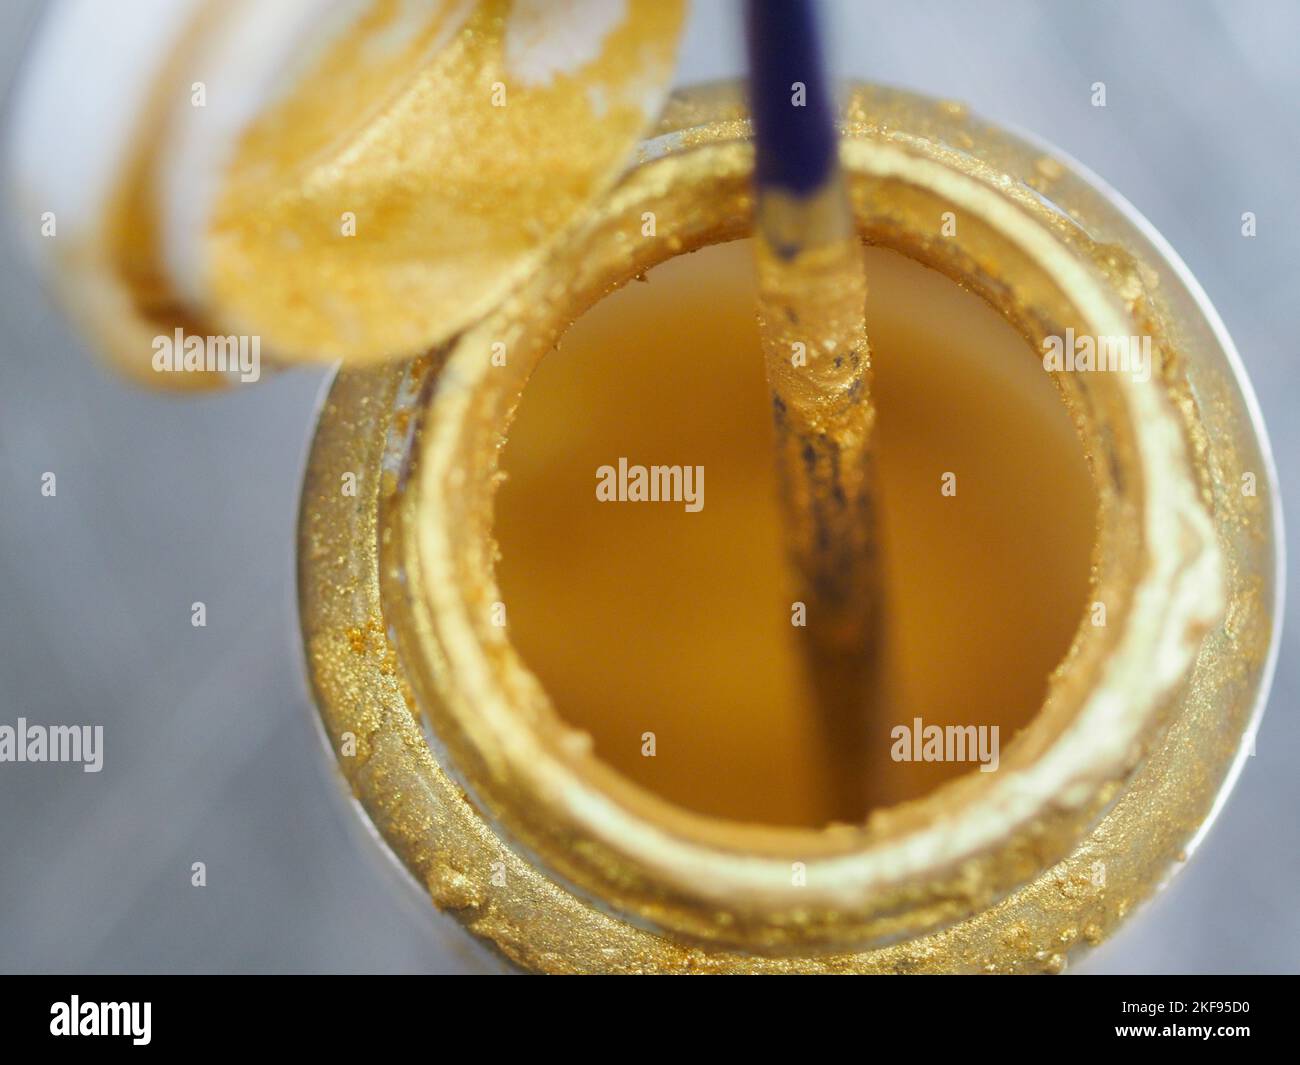 Brillo de oro comestible fotografías e imágenes de alta resolución - Alamy